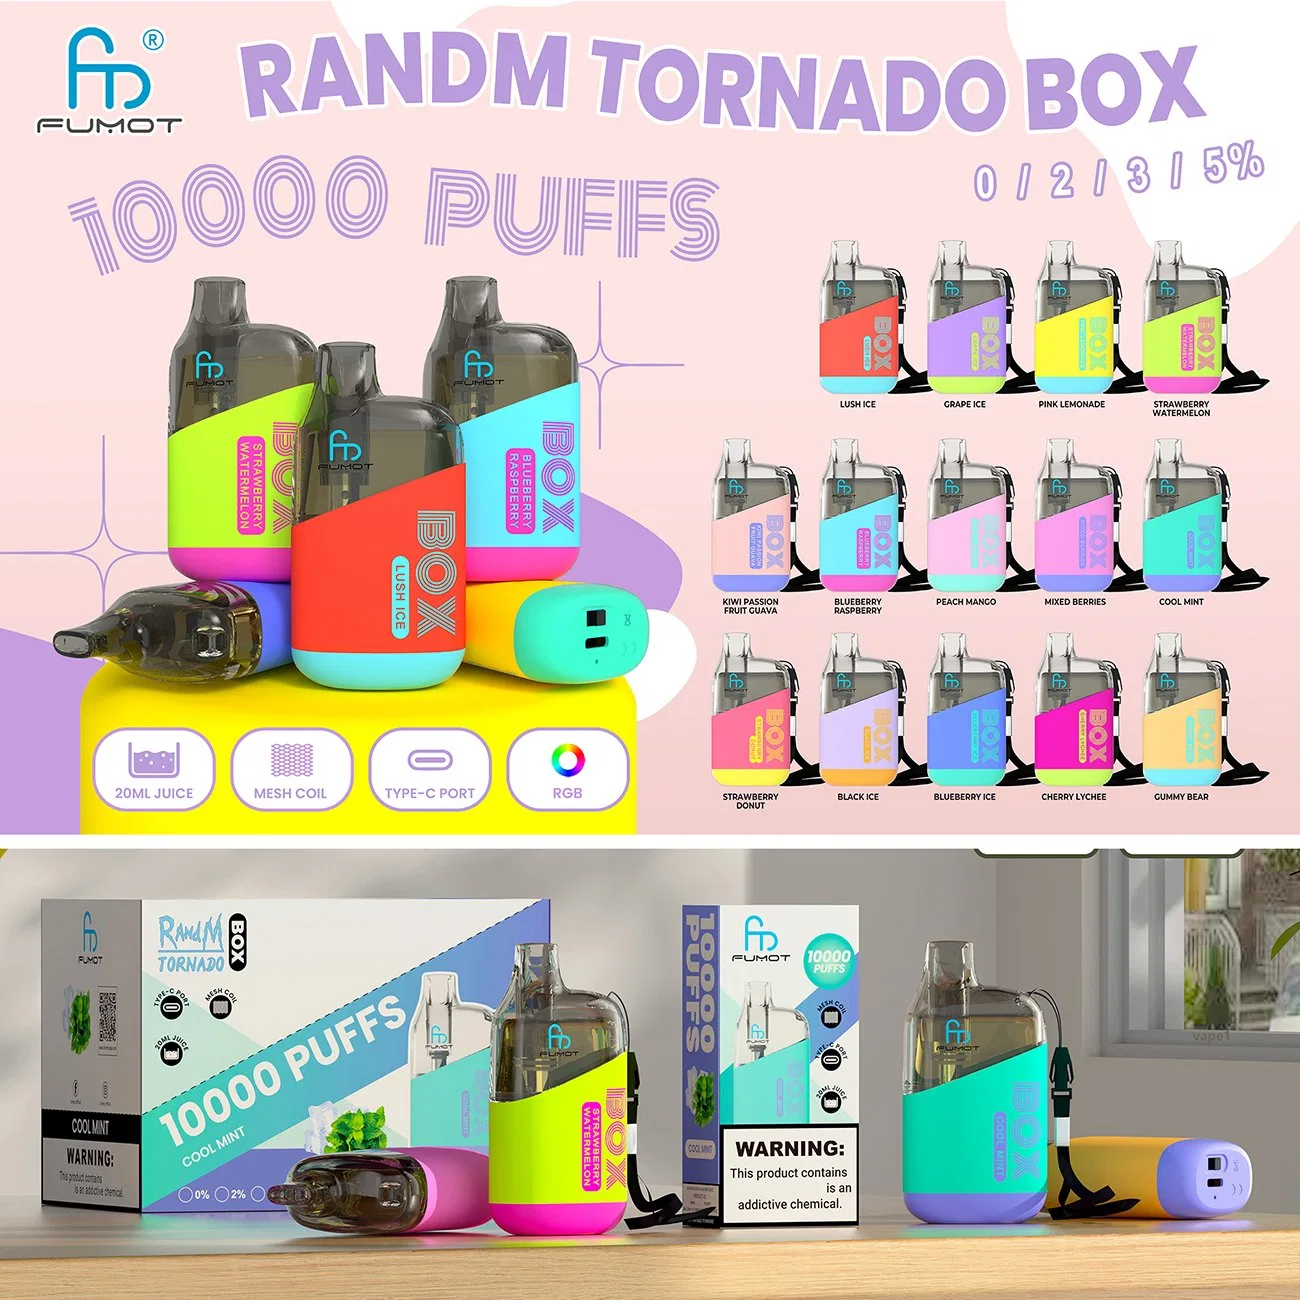 Original Randm Tornado Box 10000 Puffs Disposable E Ciagtettes Portable Vape 20ml Mesh Coil Type-C Charging Port RGB Lights 14 Flavors 0% 2% 3% 5%